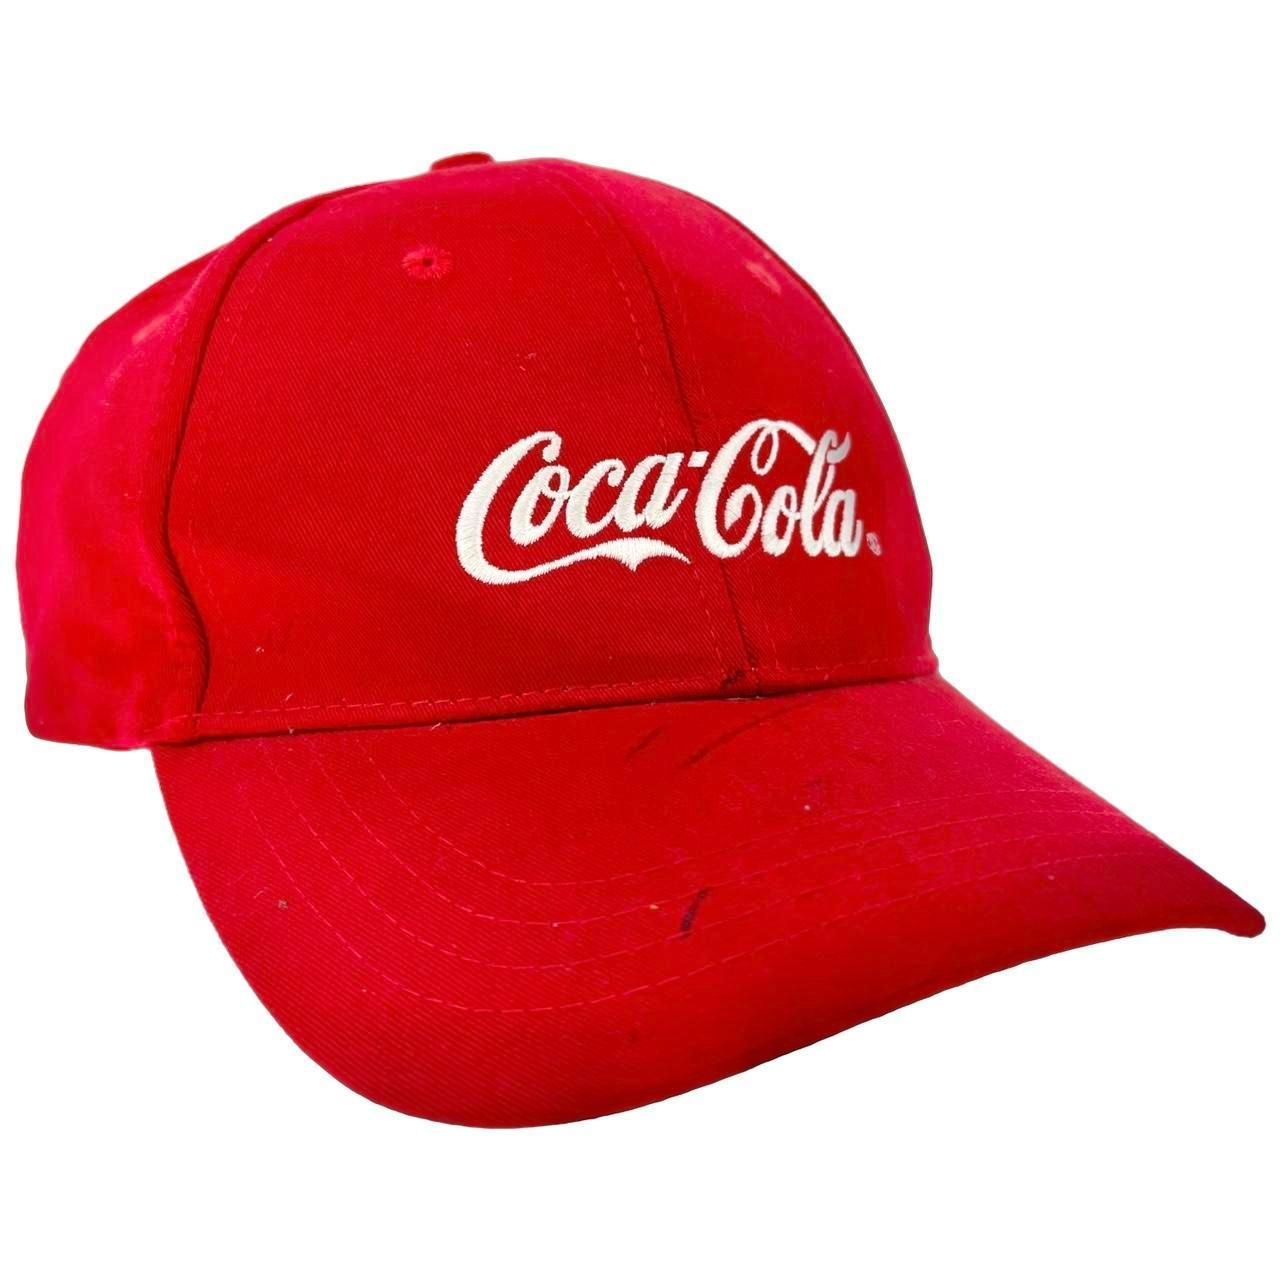 Vintage Coca Cola Hat - Known Source